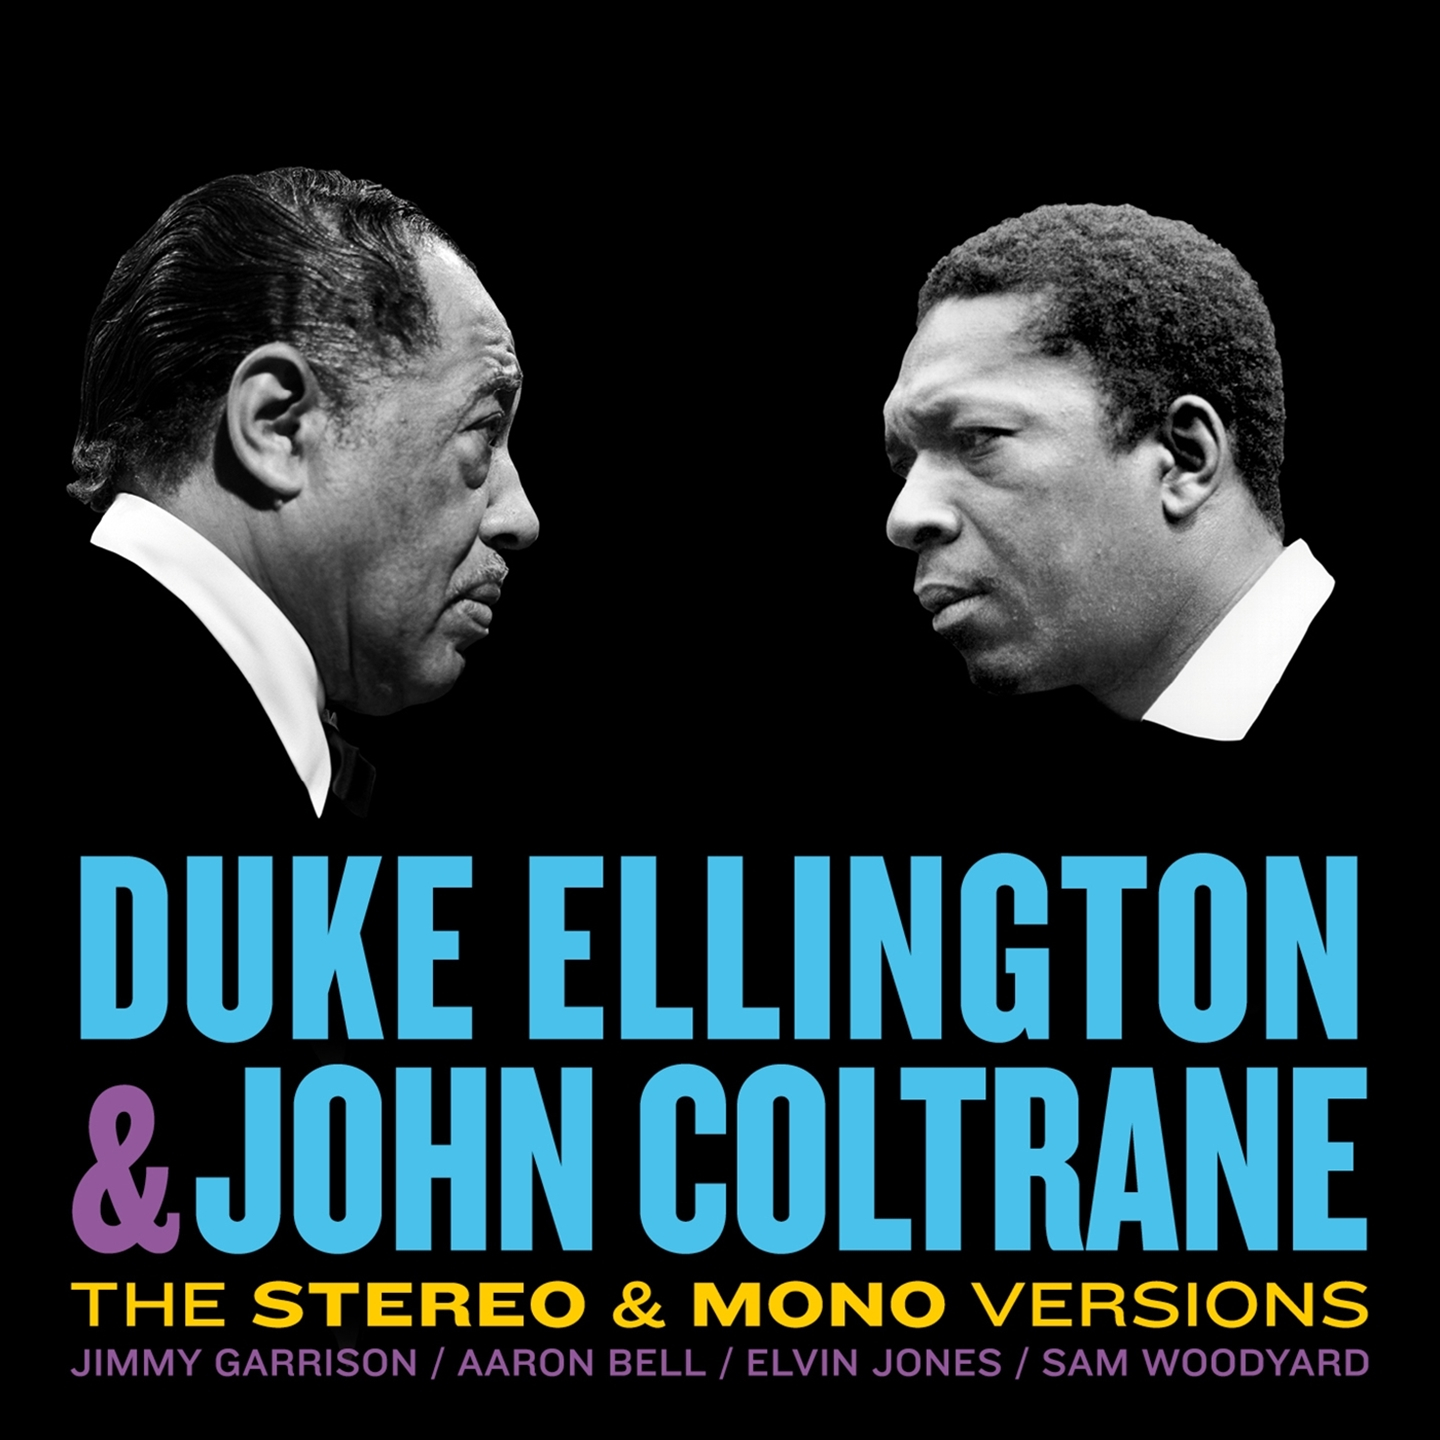 DUKE ELLINGTON & JOHN COLTRANE - THE STEREO & MONO VERSIONS